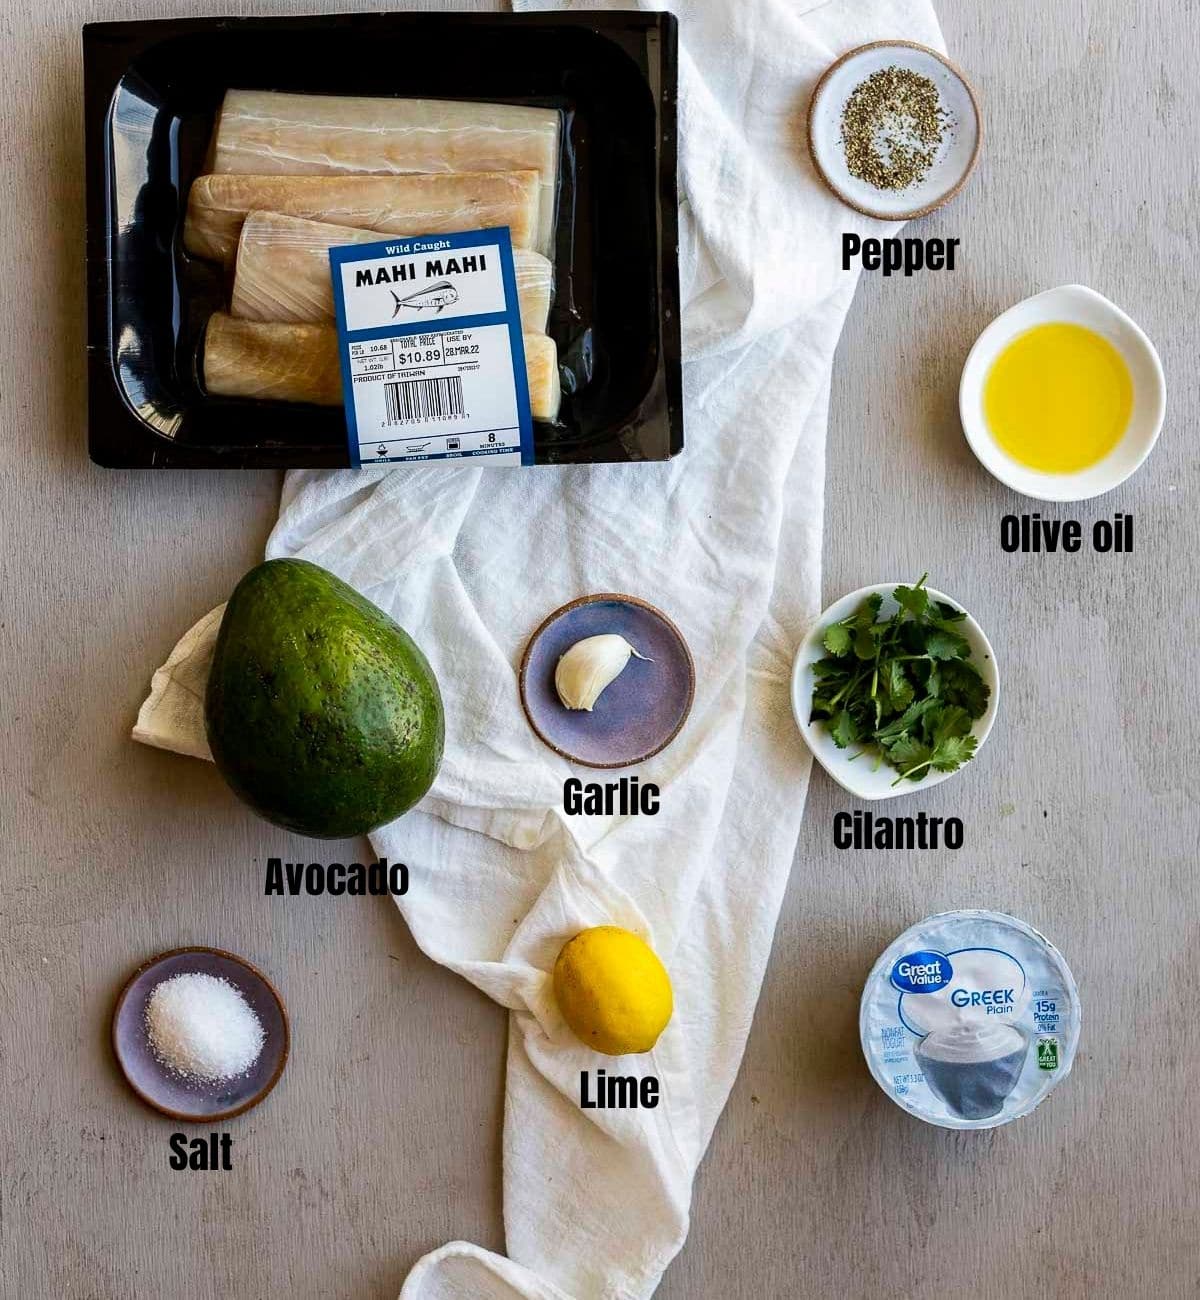 Ingredients to make sous vide mahi mahi with avocado cilantro cream sauce arranged individually and labeled.